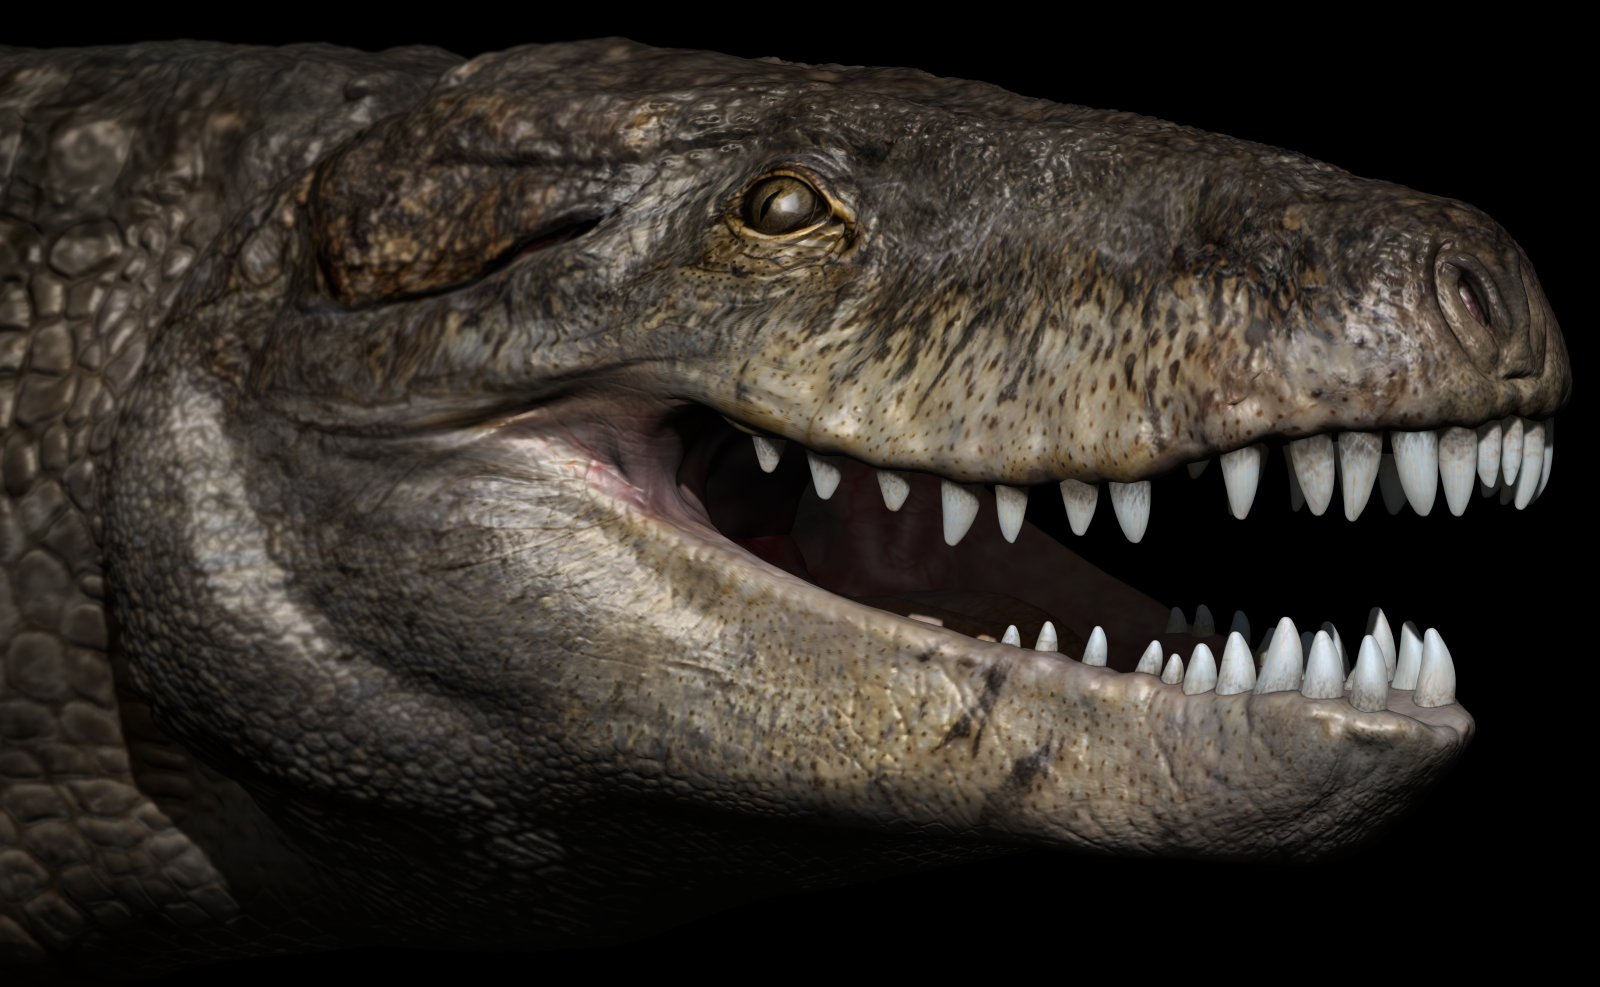 Jurassic-era crocodile had teeth similar to those of T-rex